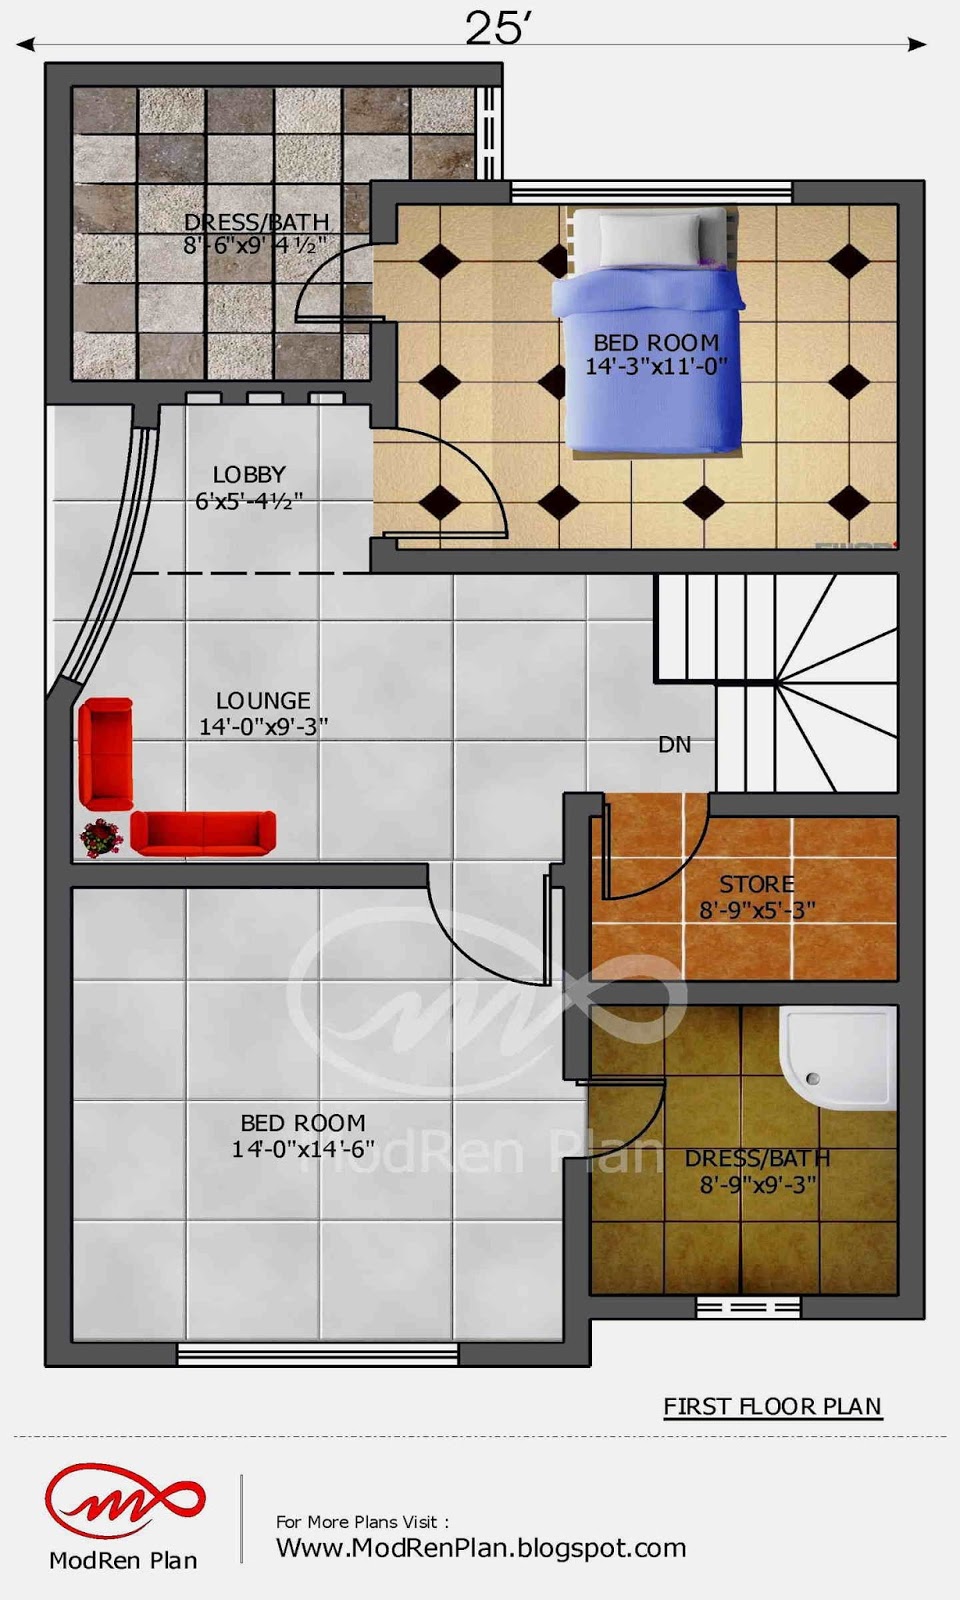 5 Marla House Plan 1200 Sq Ft 25x45 Feet Wwwmodrenplanblogspotcom